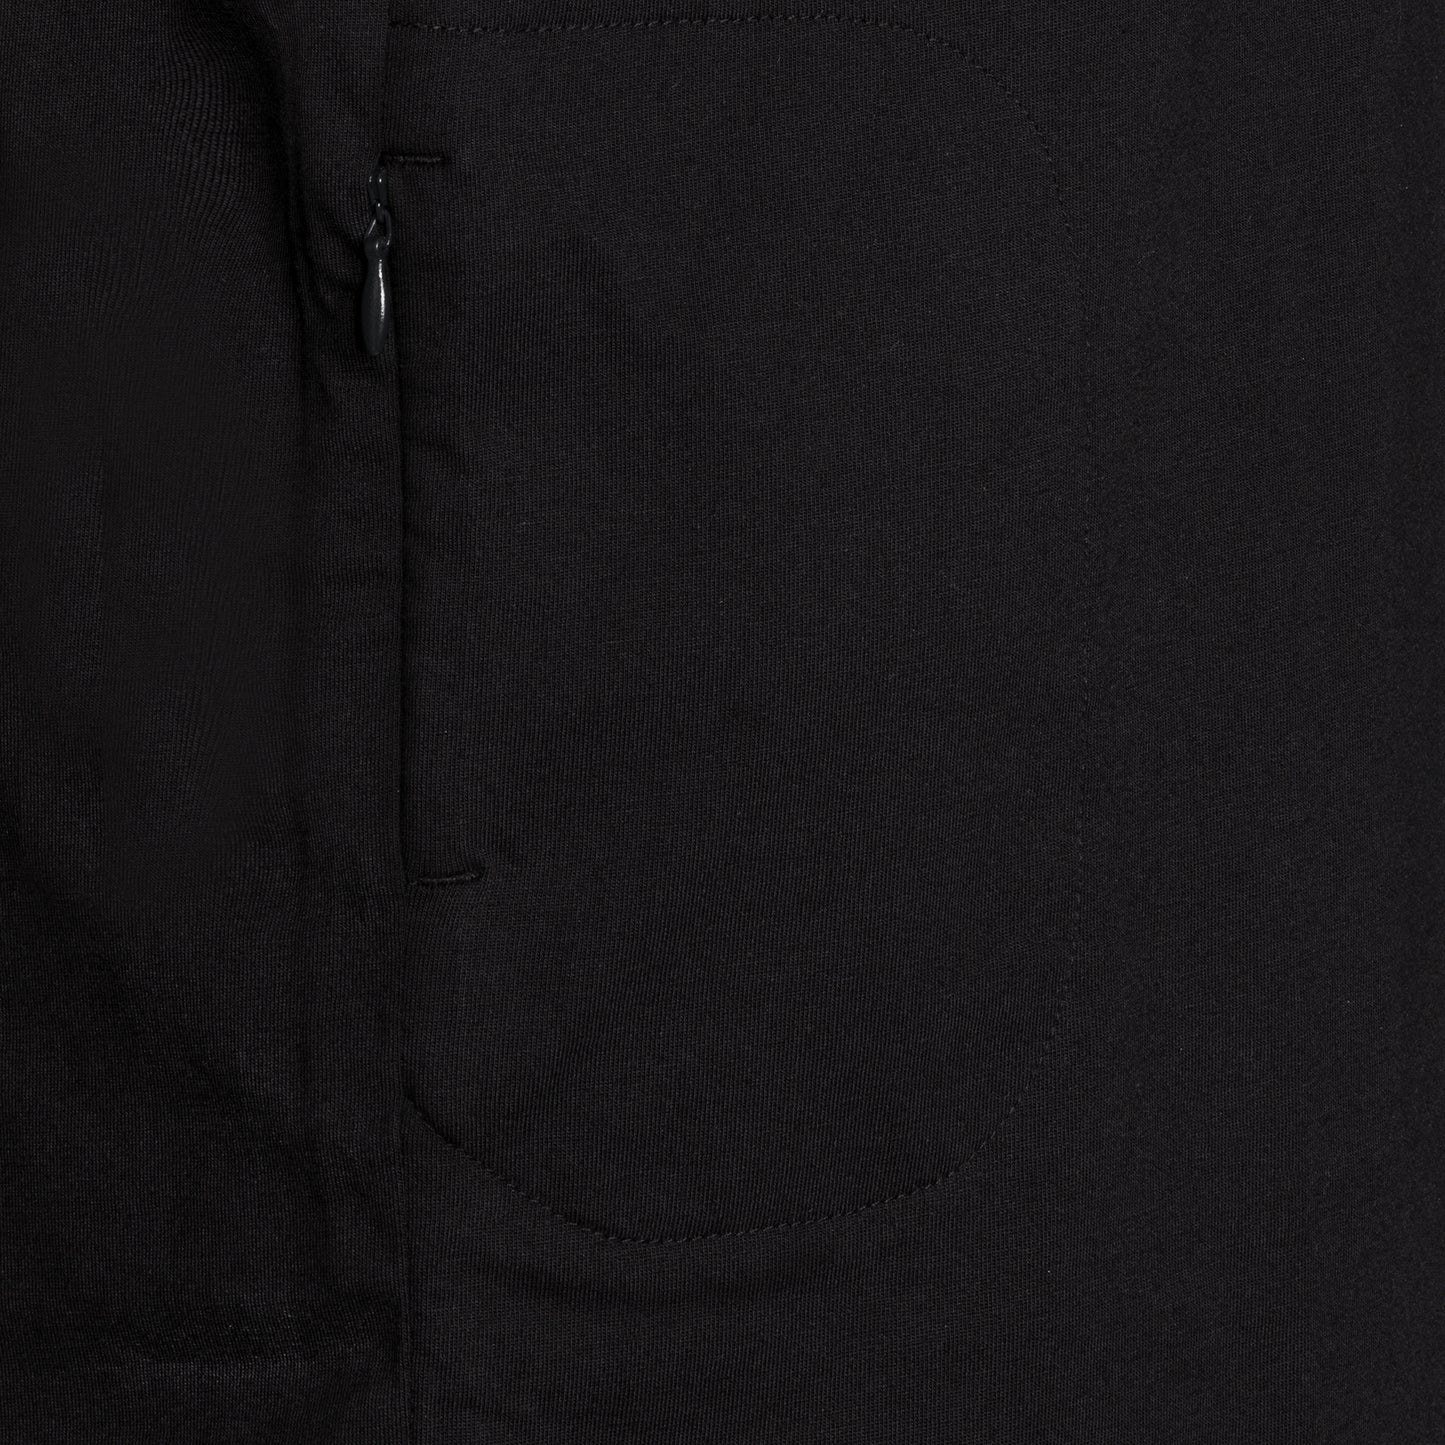 SPYSCAPE Spymaster T-shirt with Hidden Zip Pocket - Close up of hidden pocket